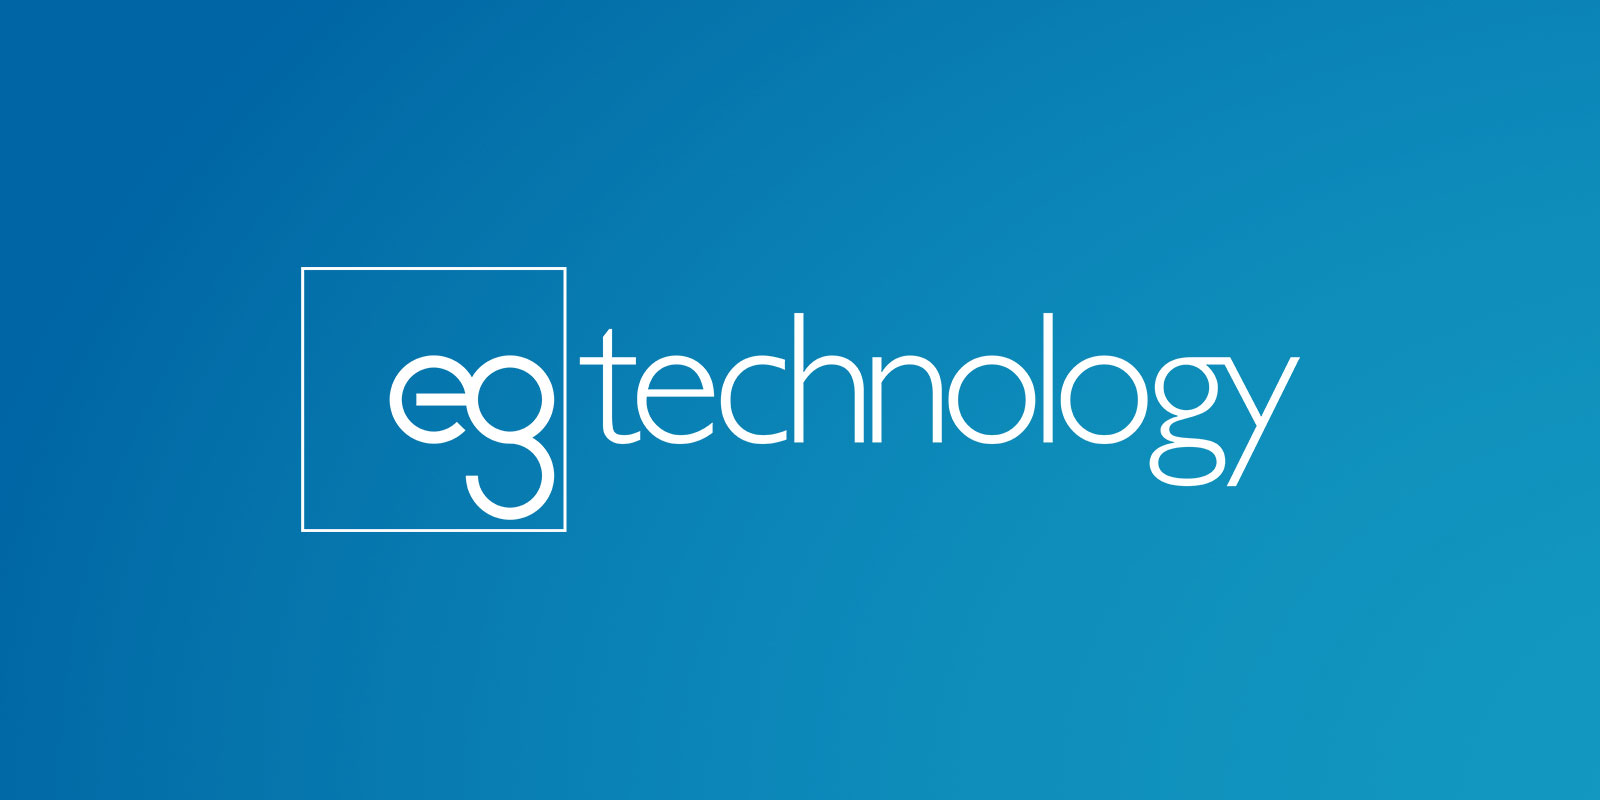 eg technology joins Cambridge Wireless